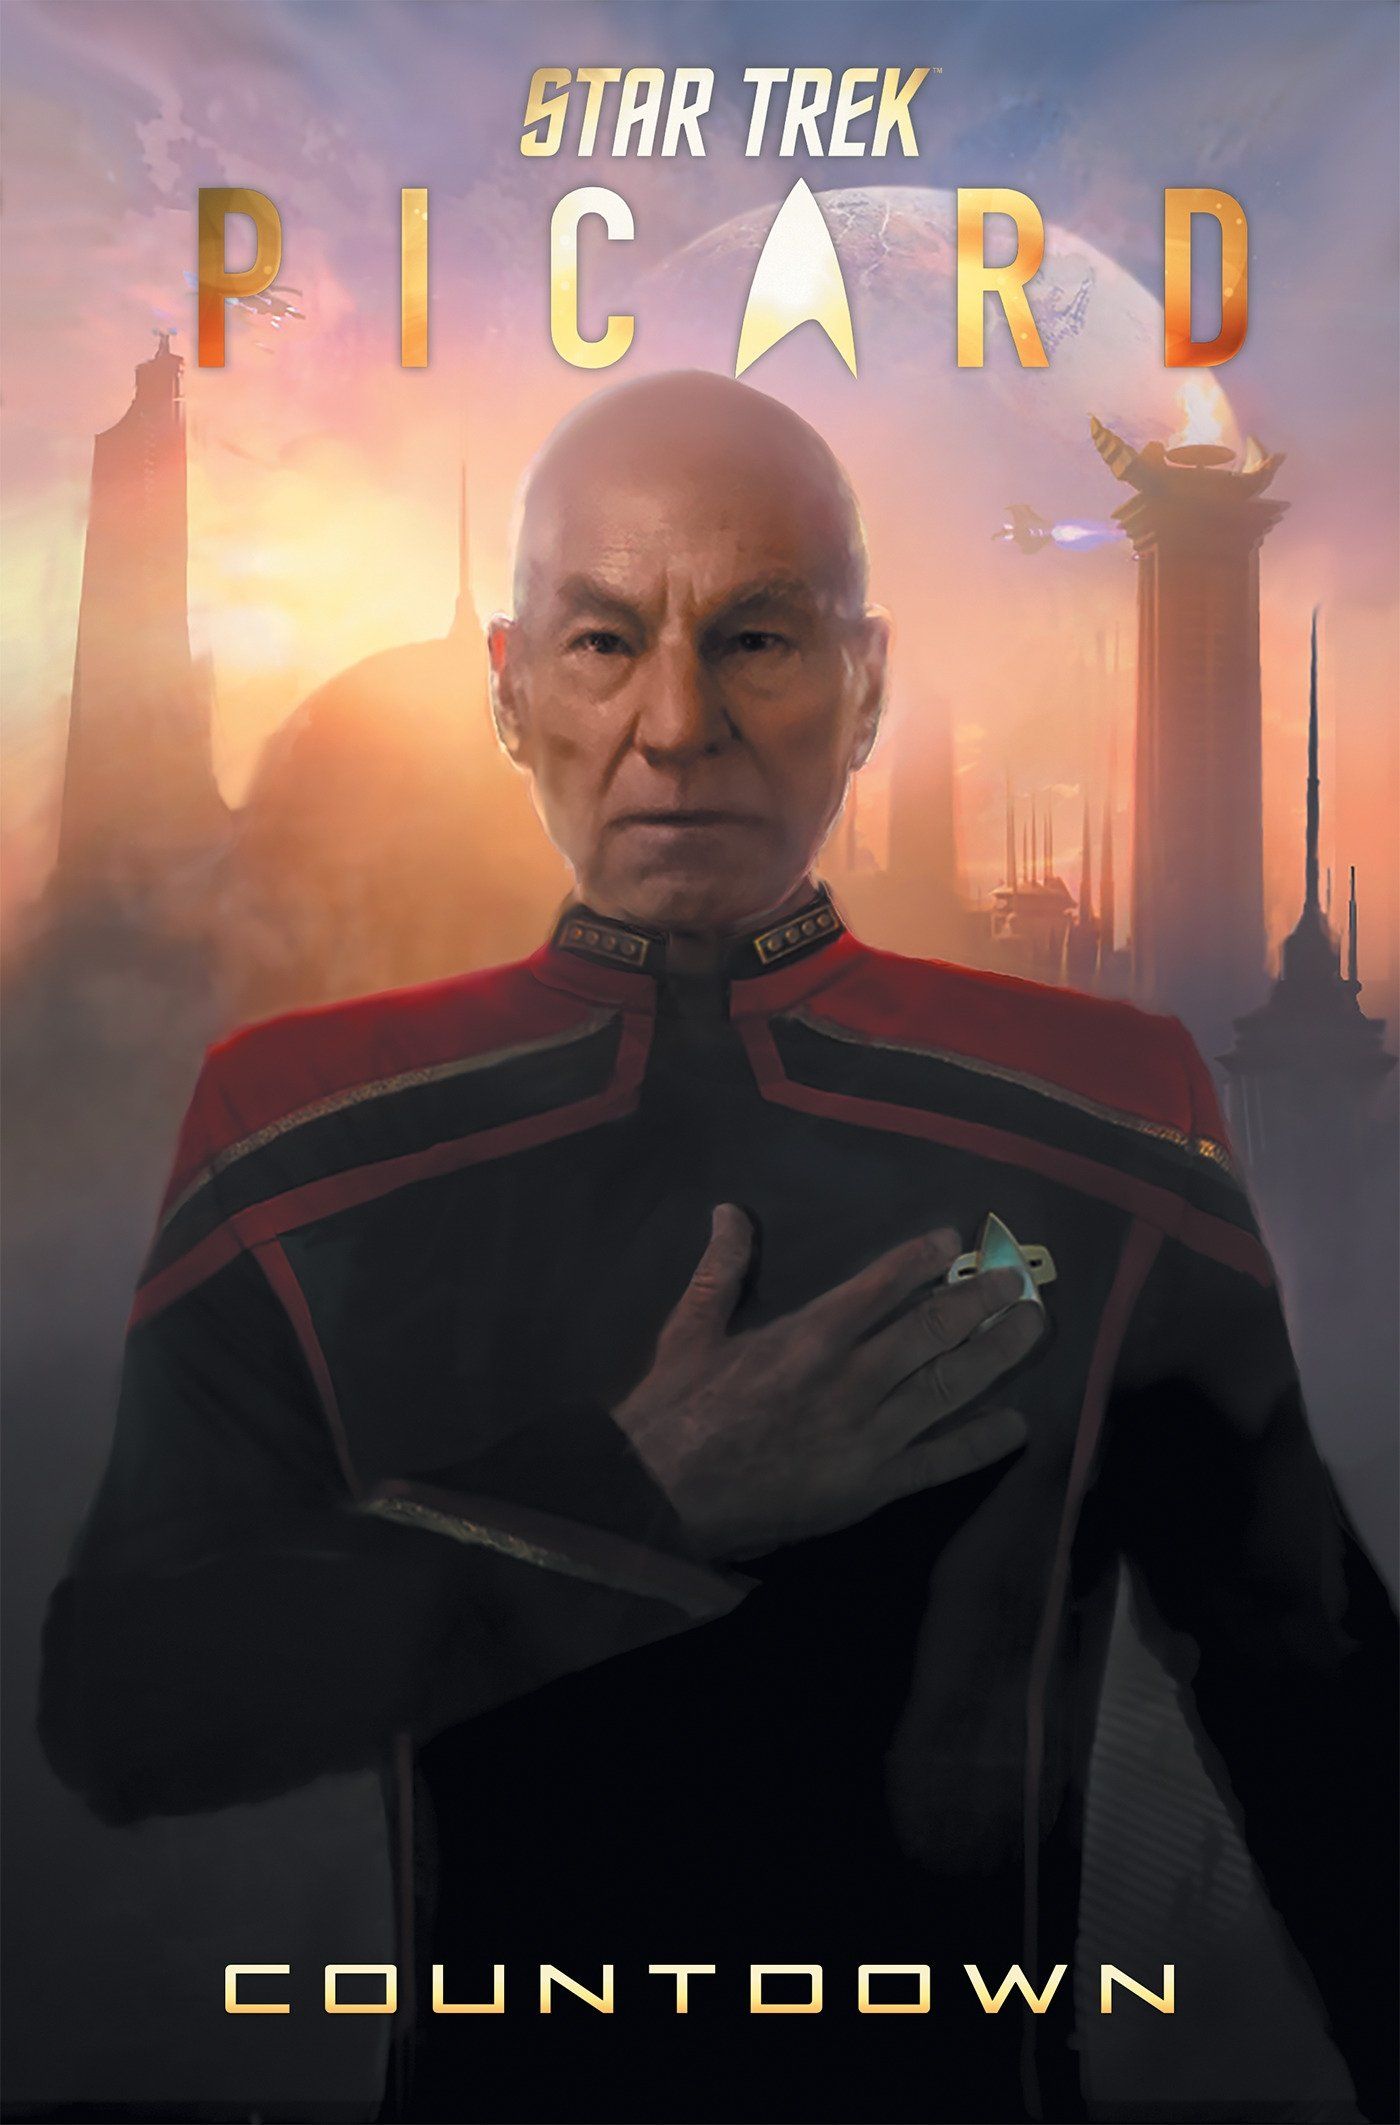 Picard favorite star wars